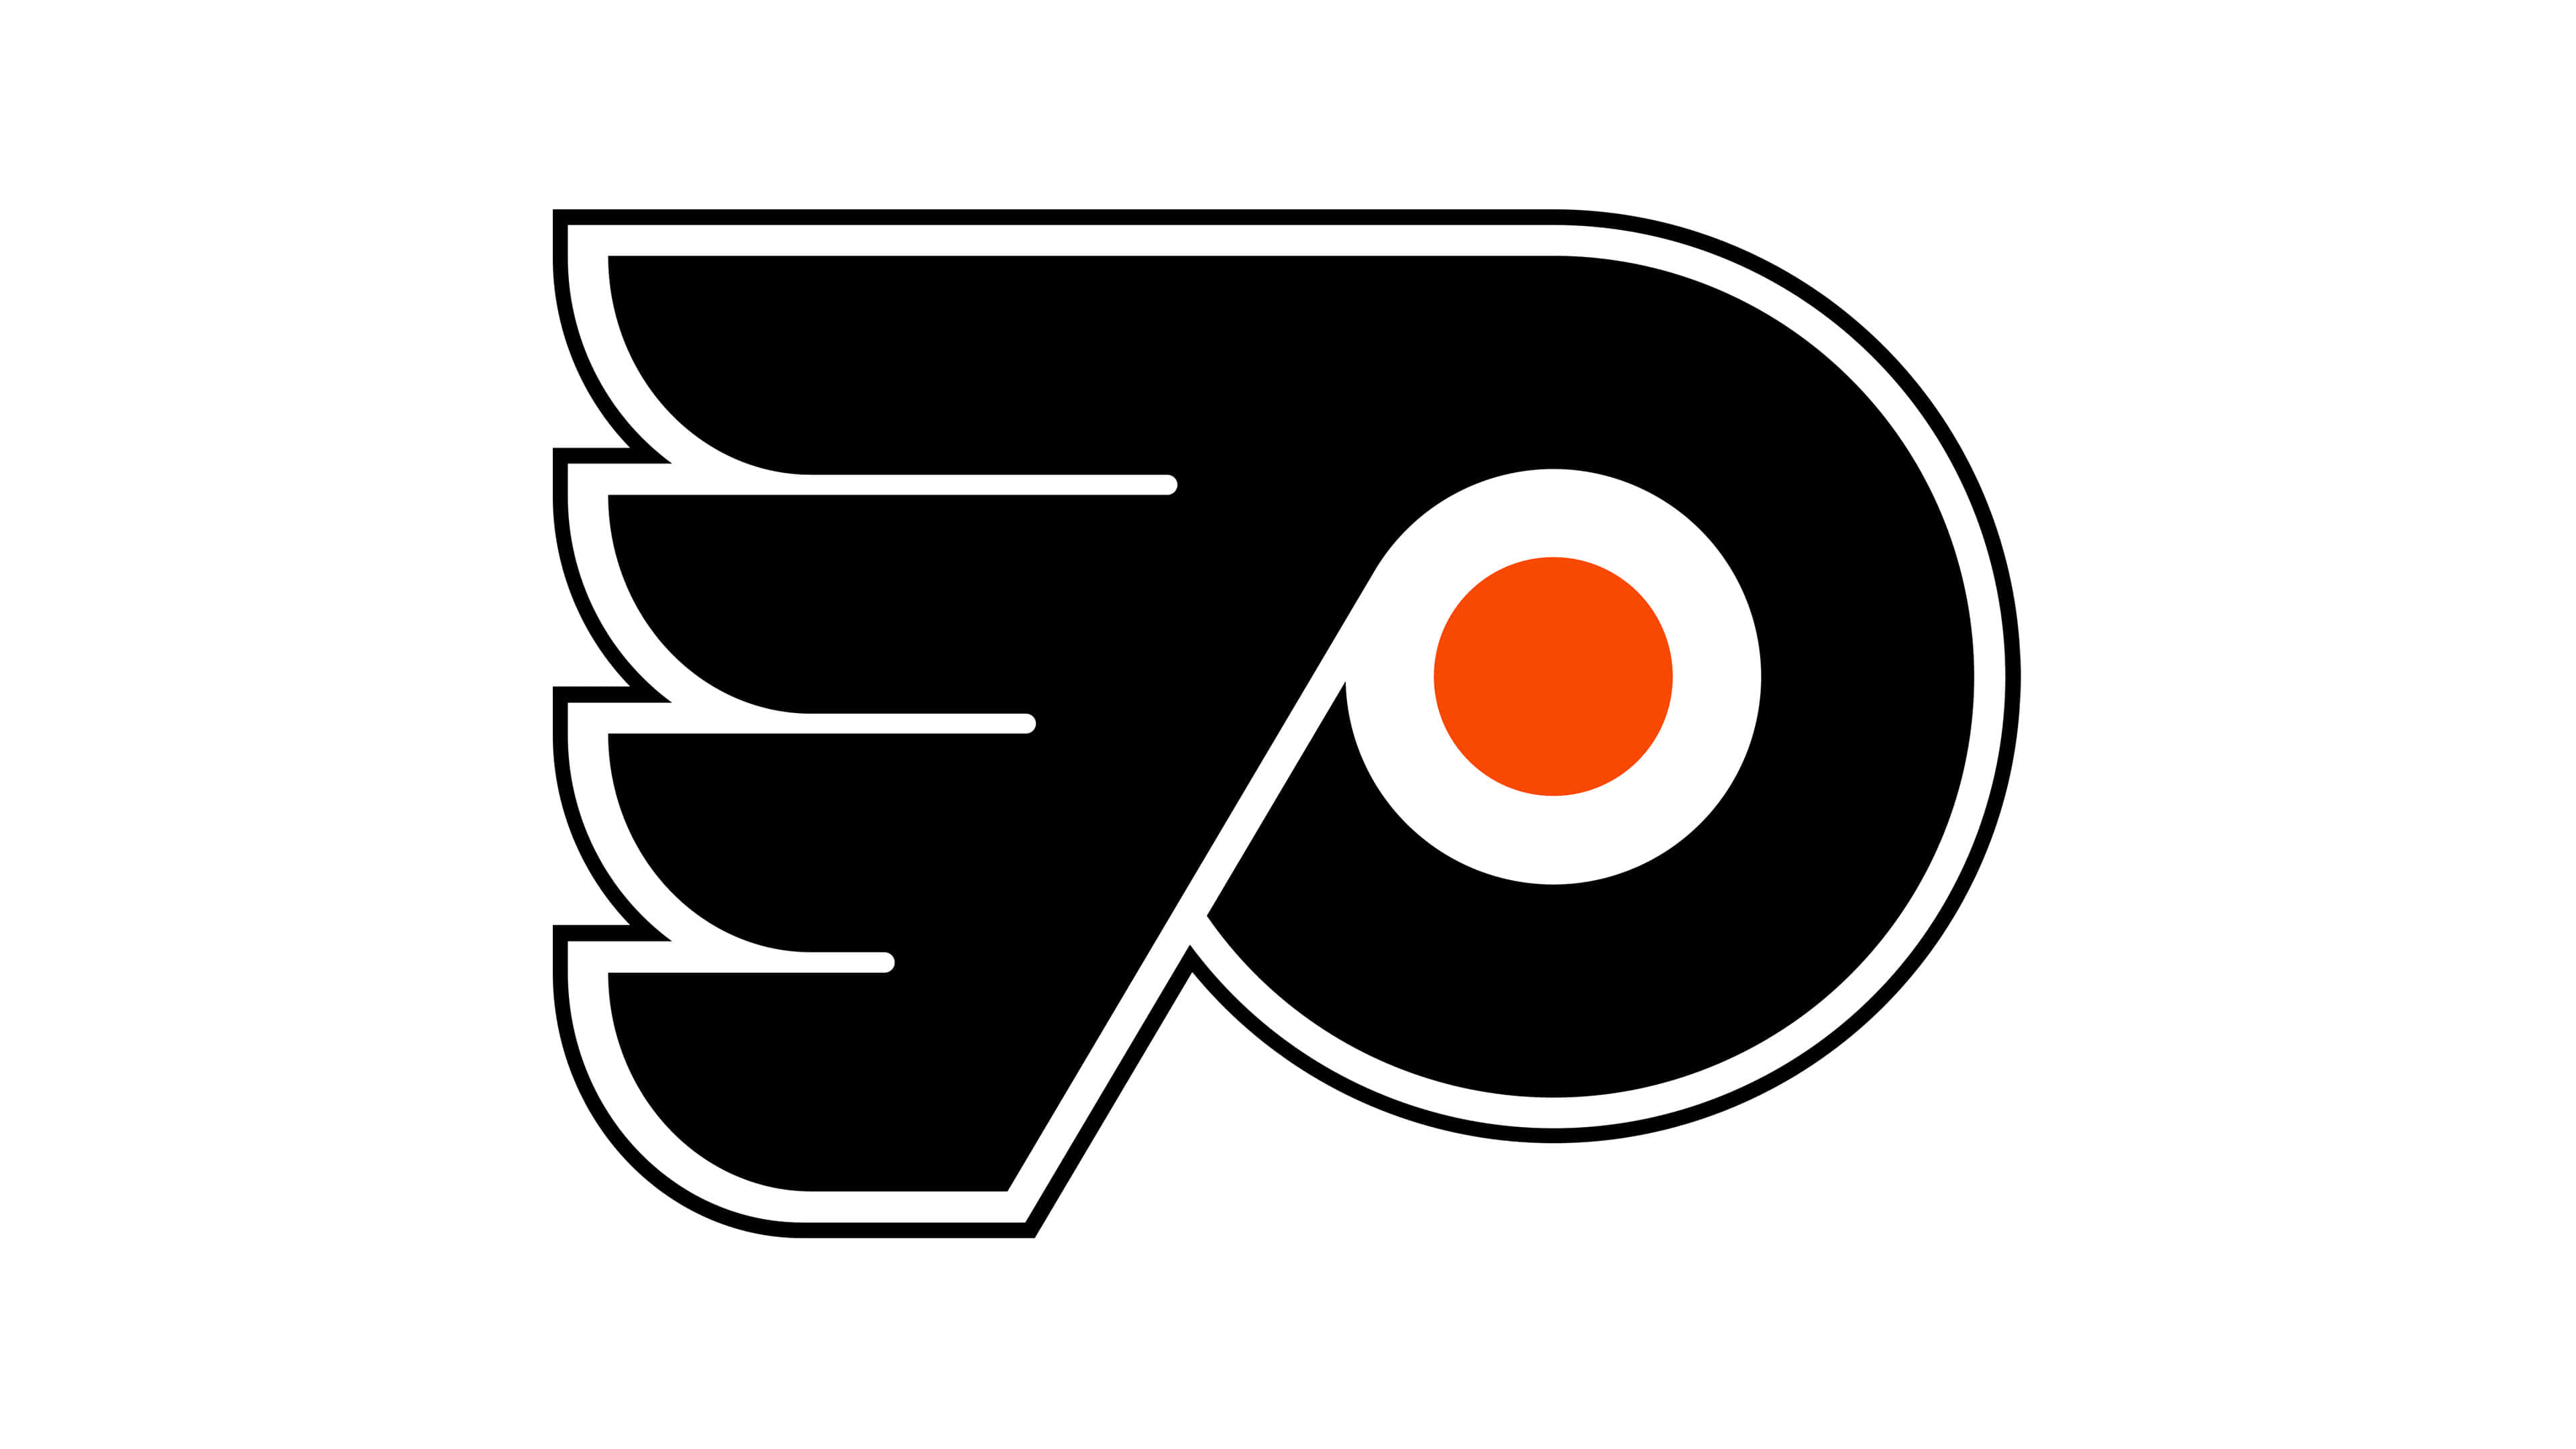 Philadelphia Flyers Logo Wallpapers